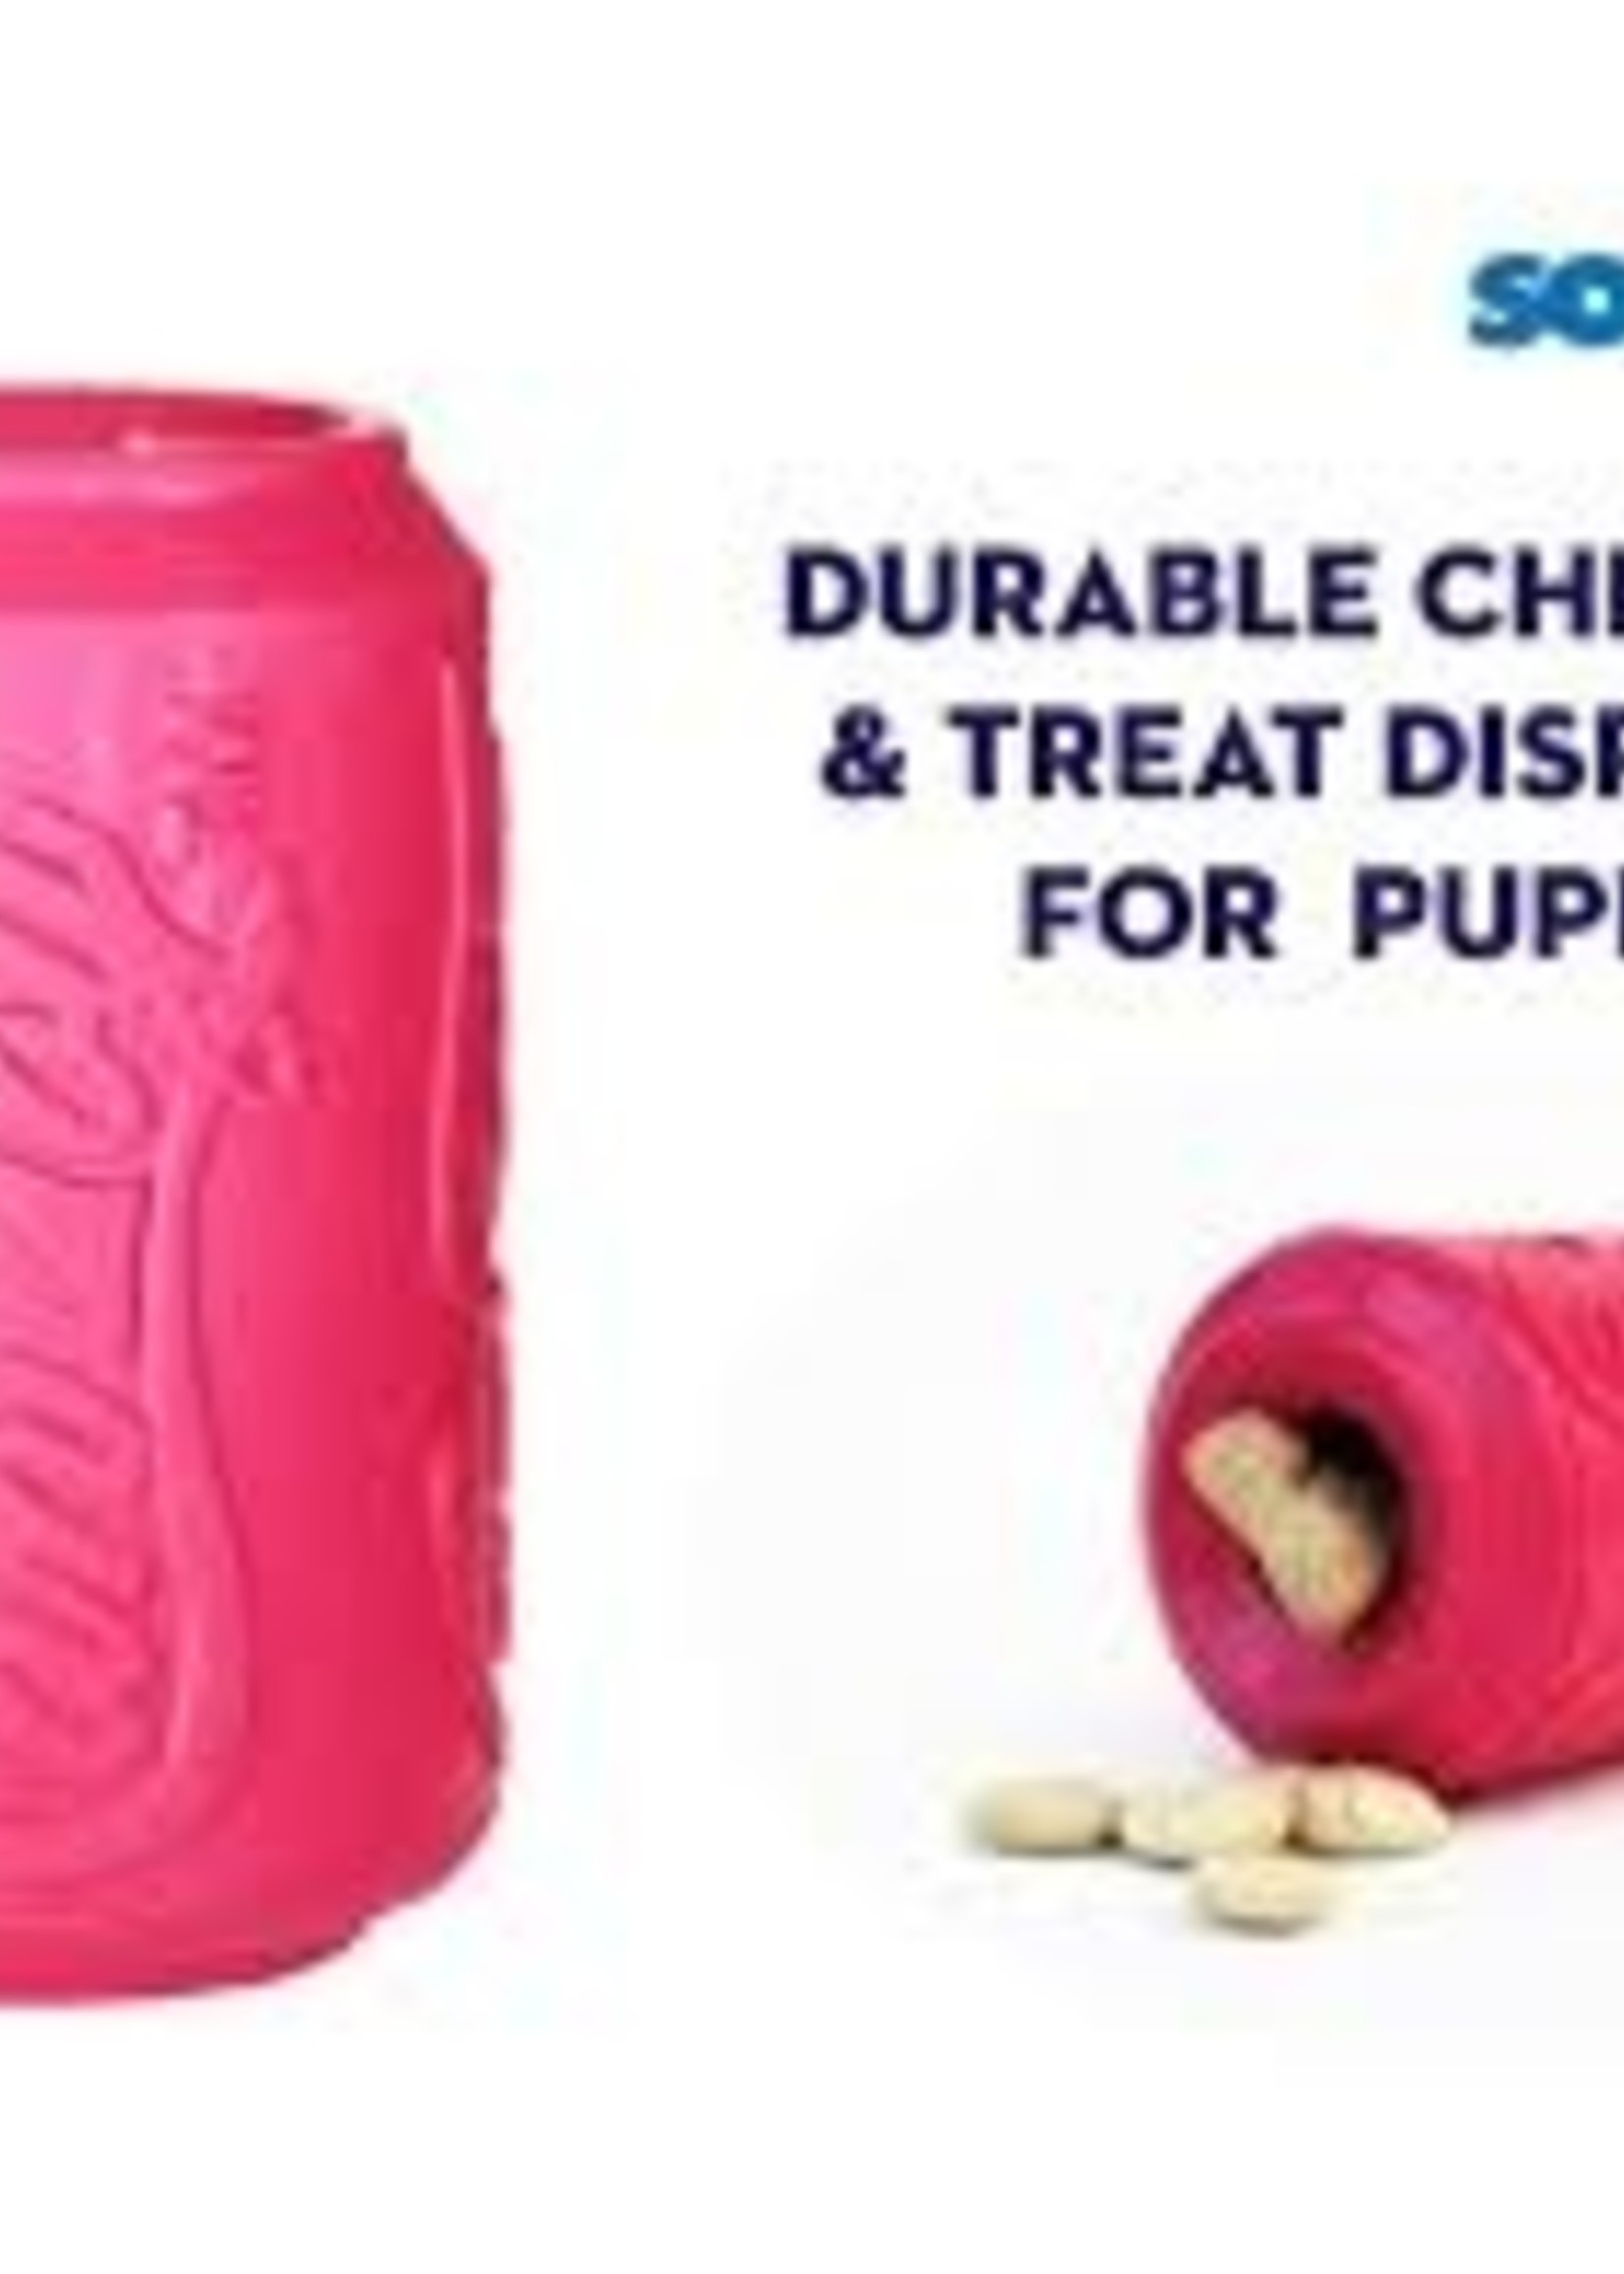 Sodapup Sodapup Puppy Treat Dispenser & Chew Toy Lrg